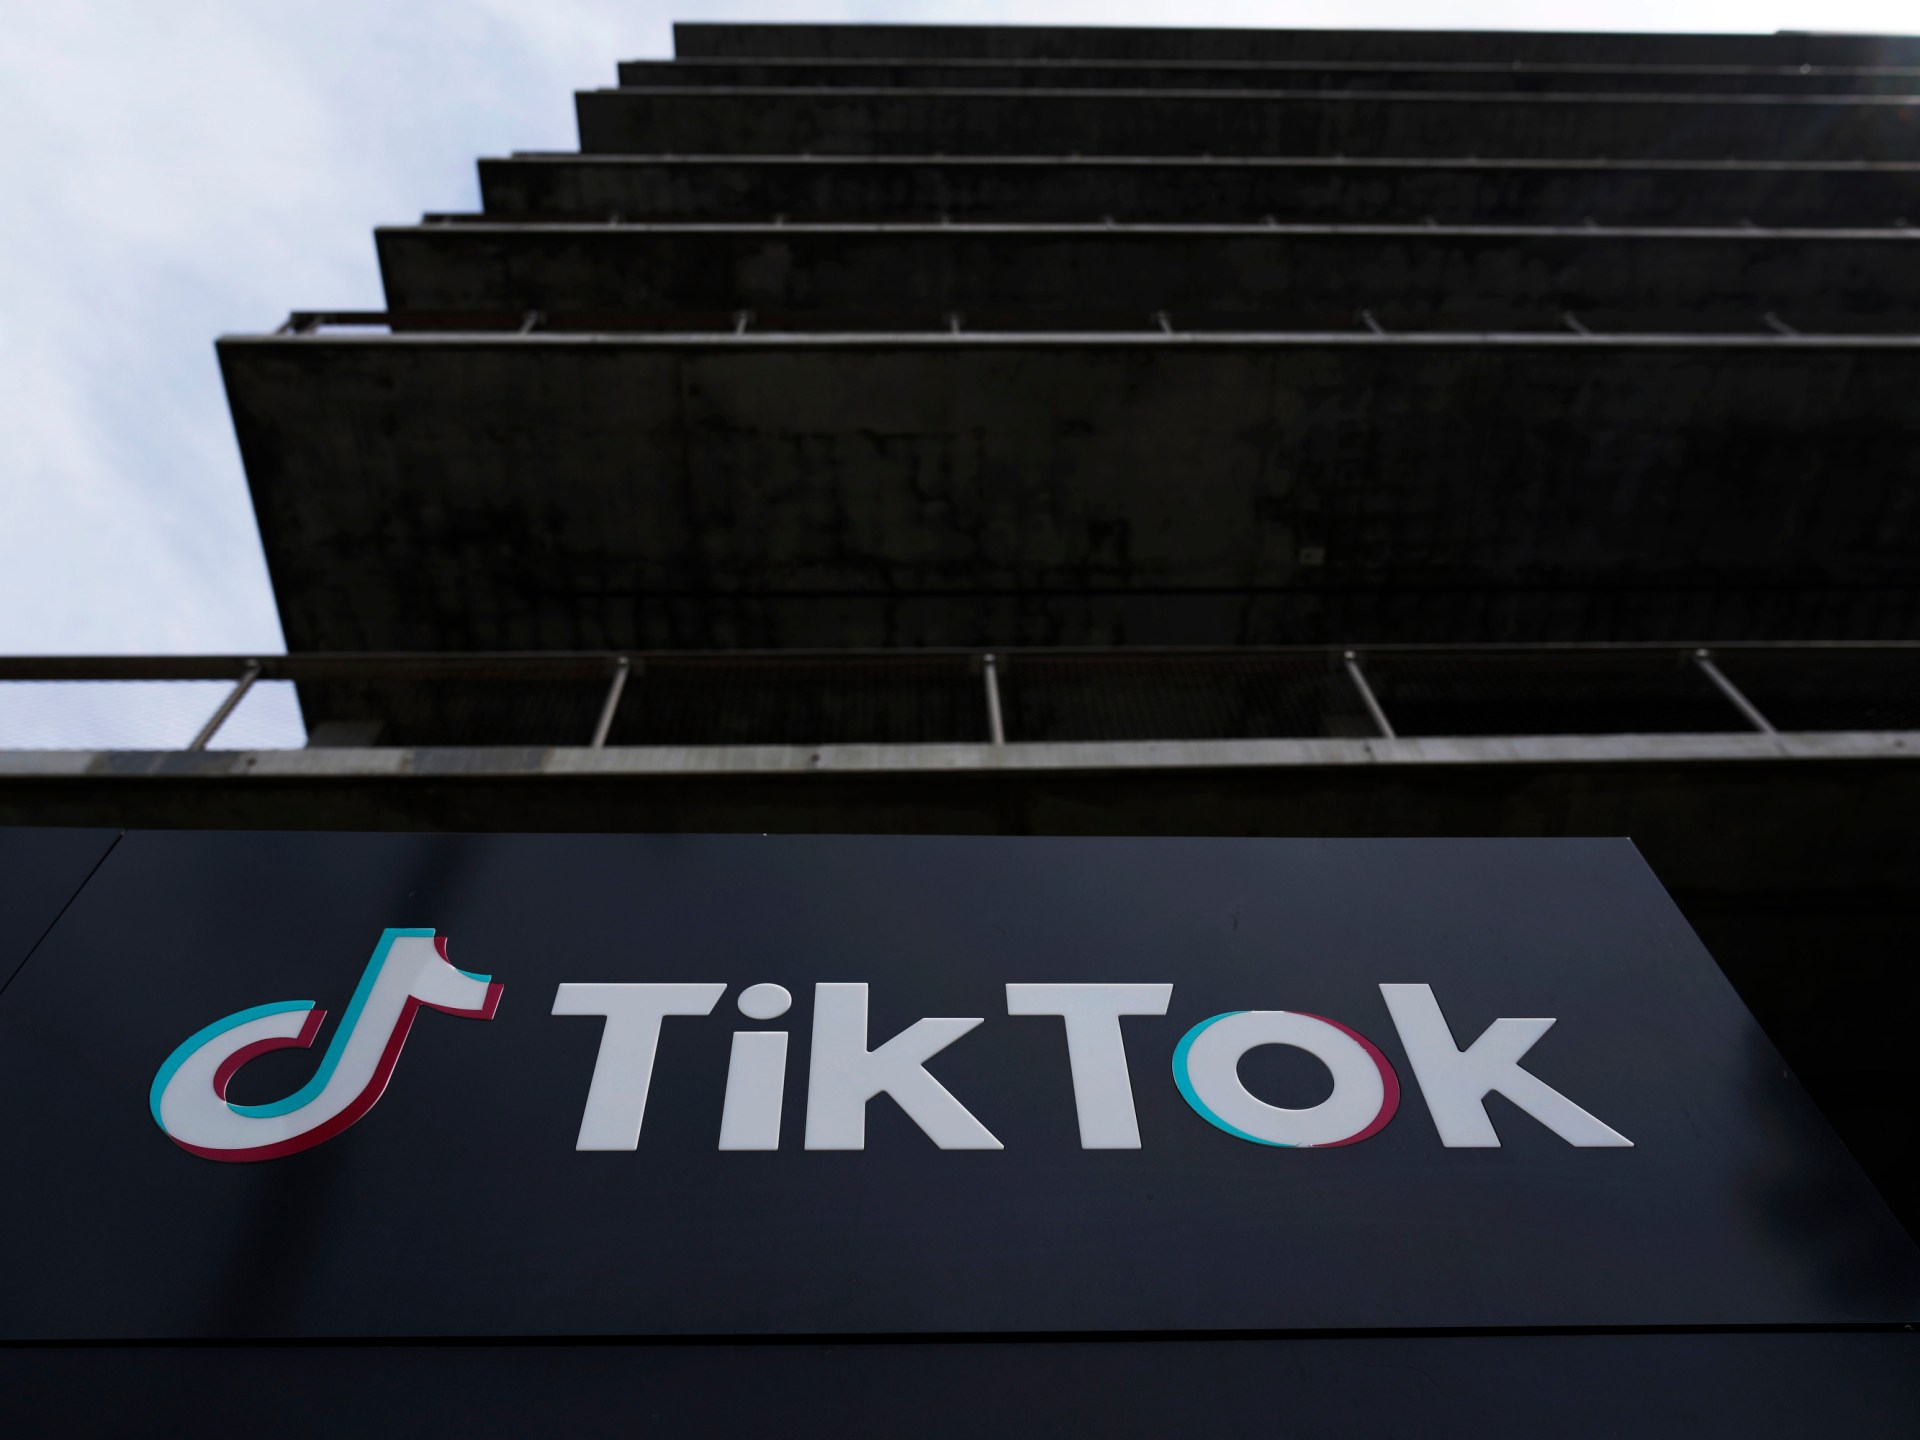 US Senate passes bill to force sale of TikTok, sending it to Biden | Technology